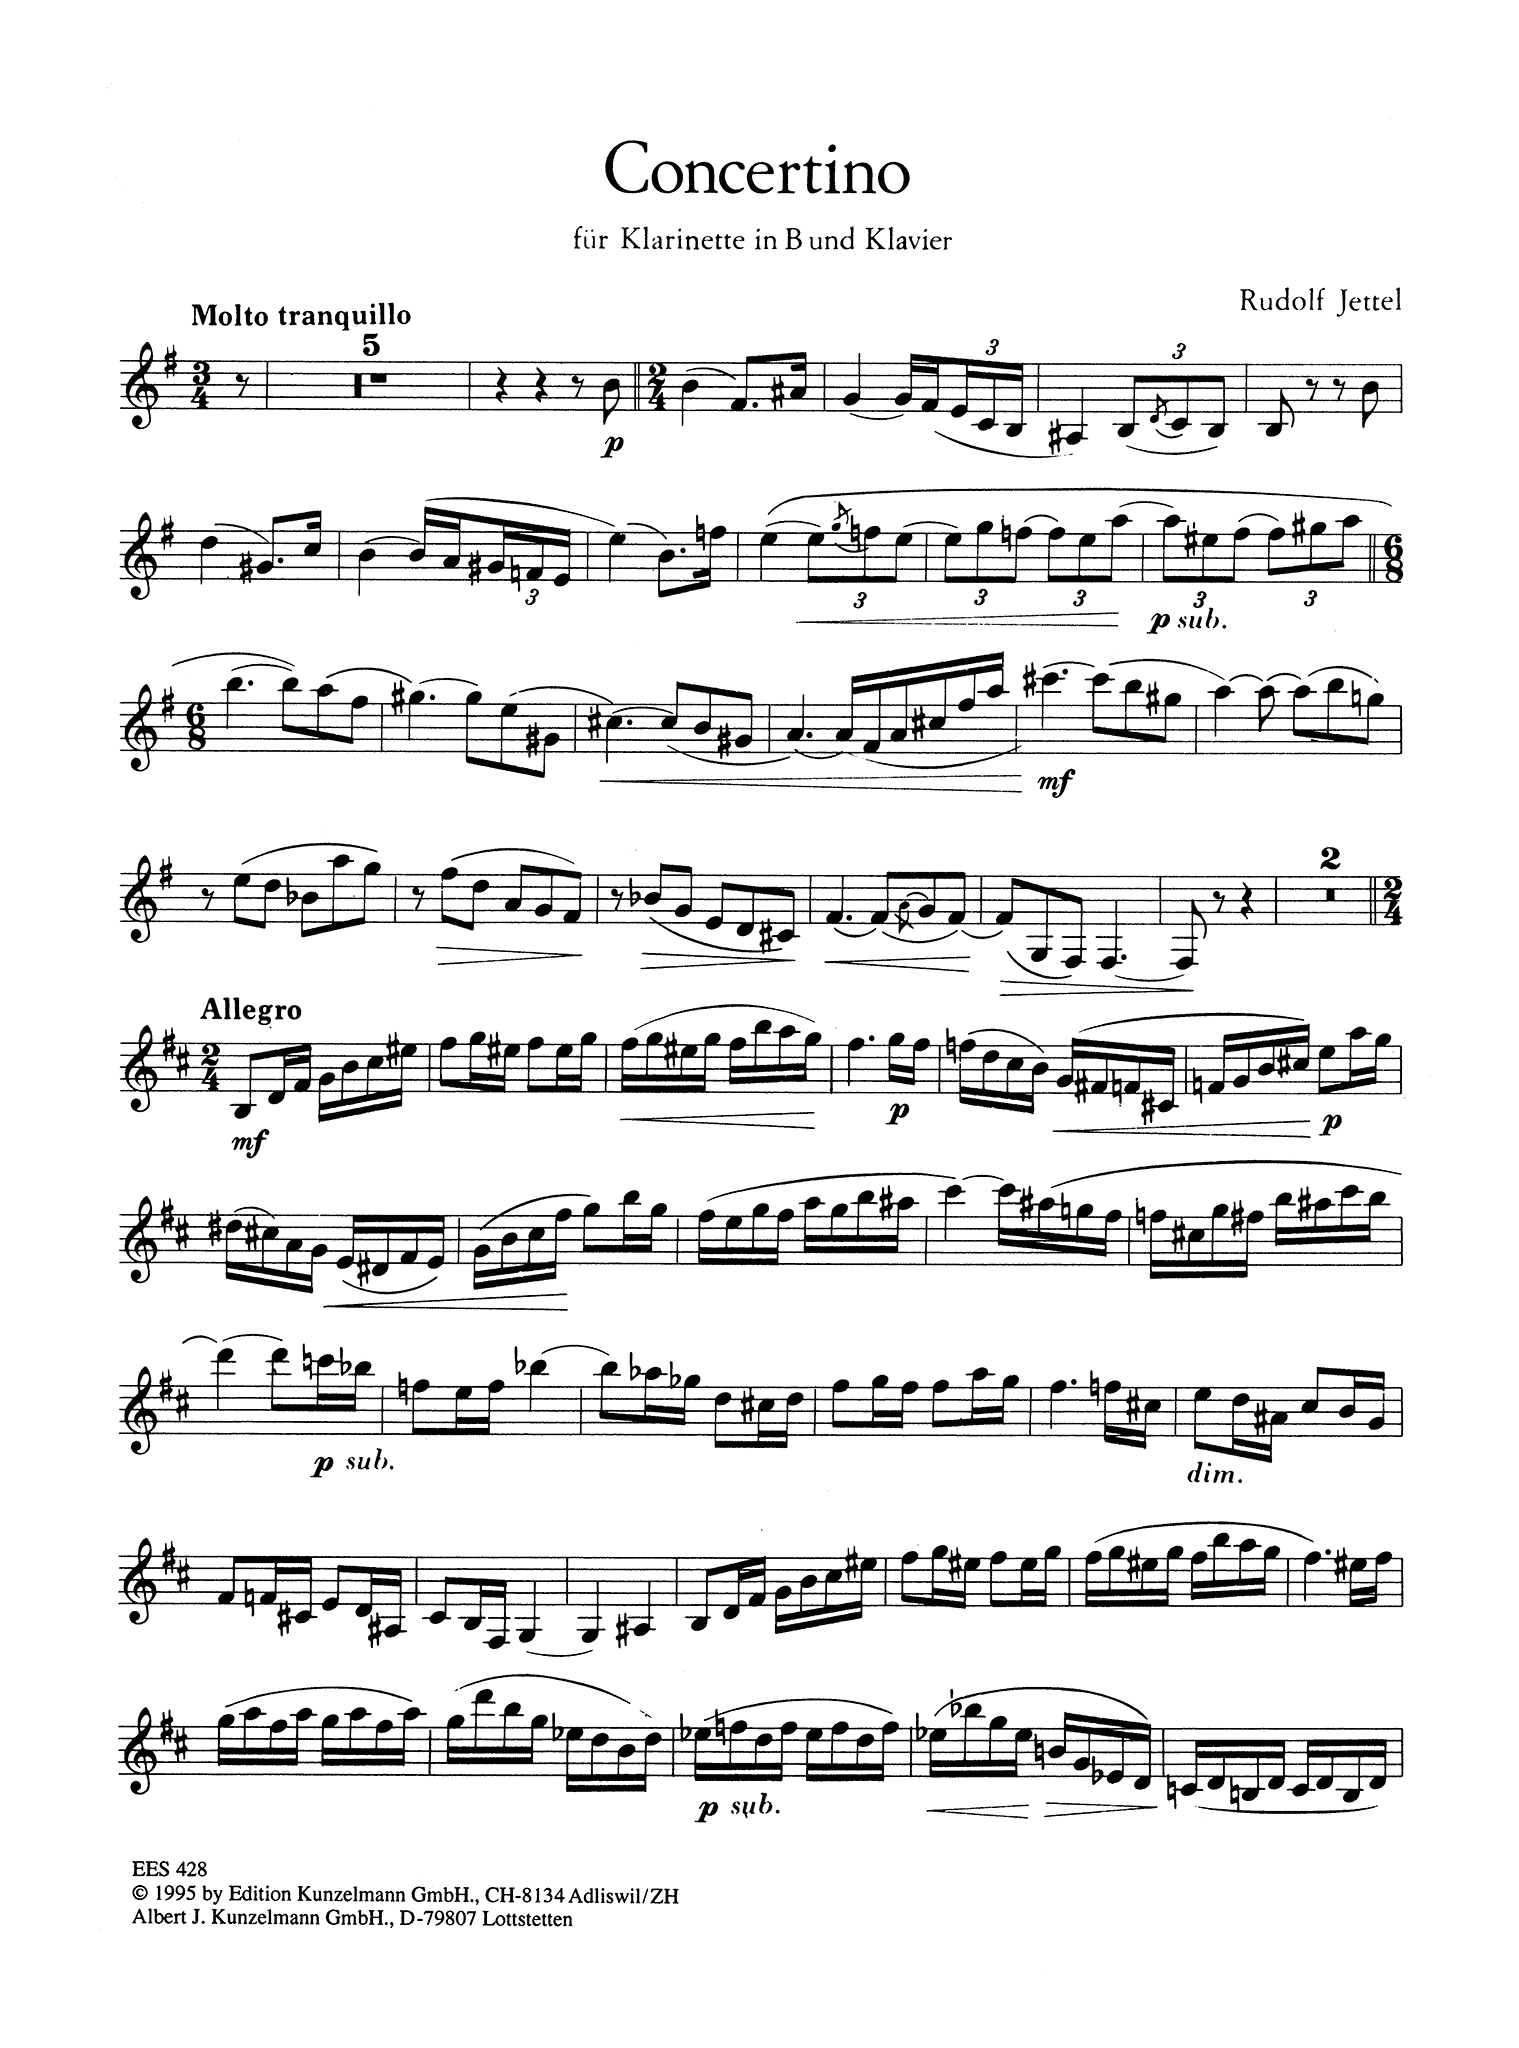 Jettel Concertino clarinet and piano solo part